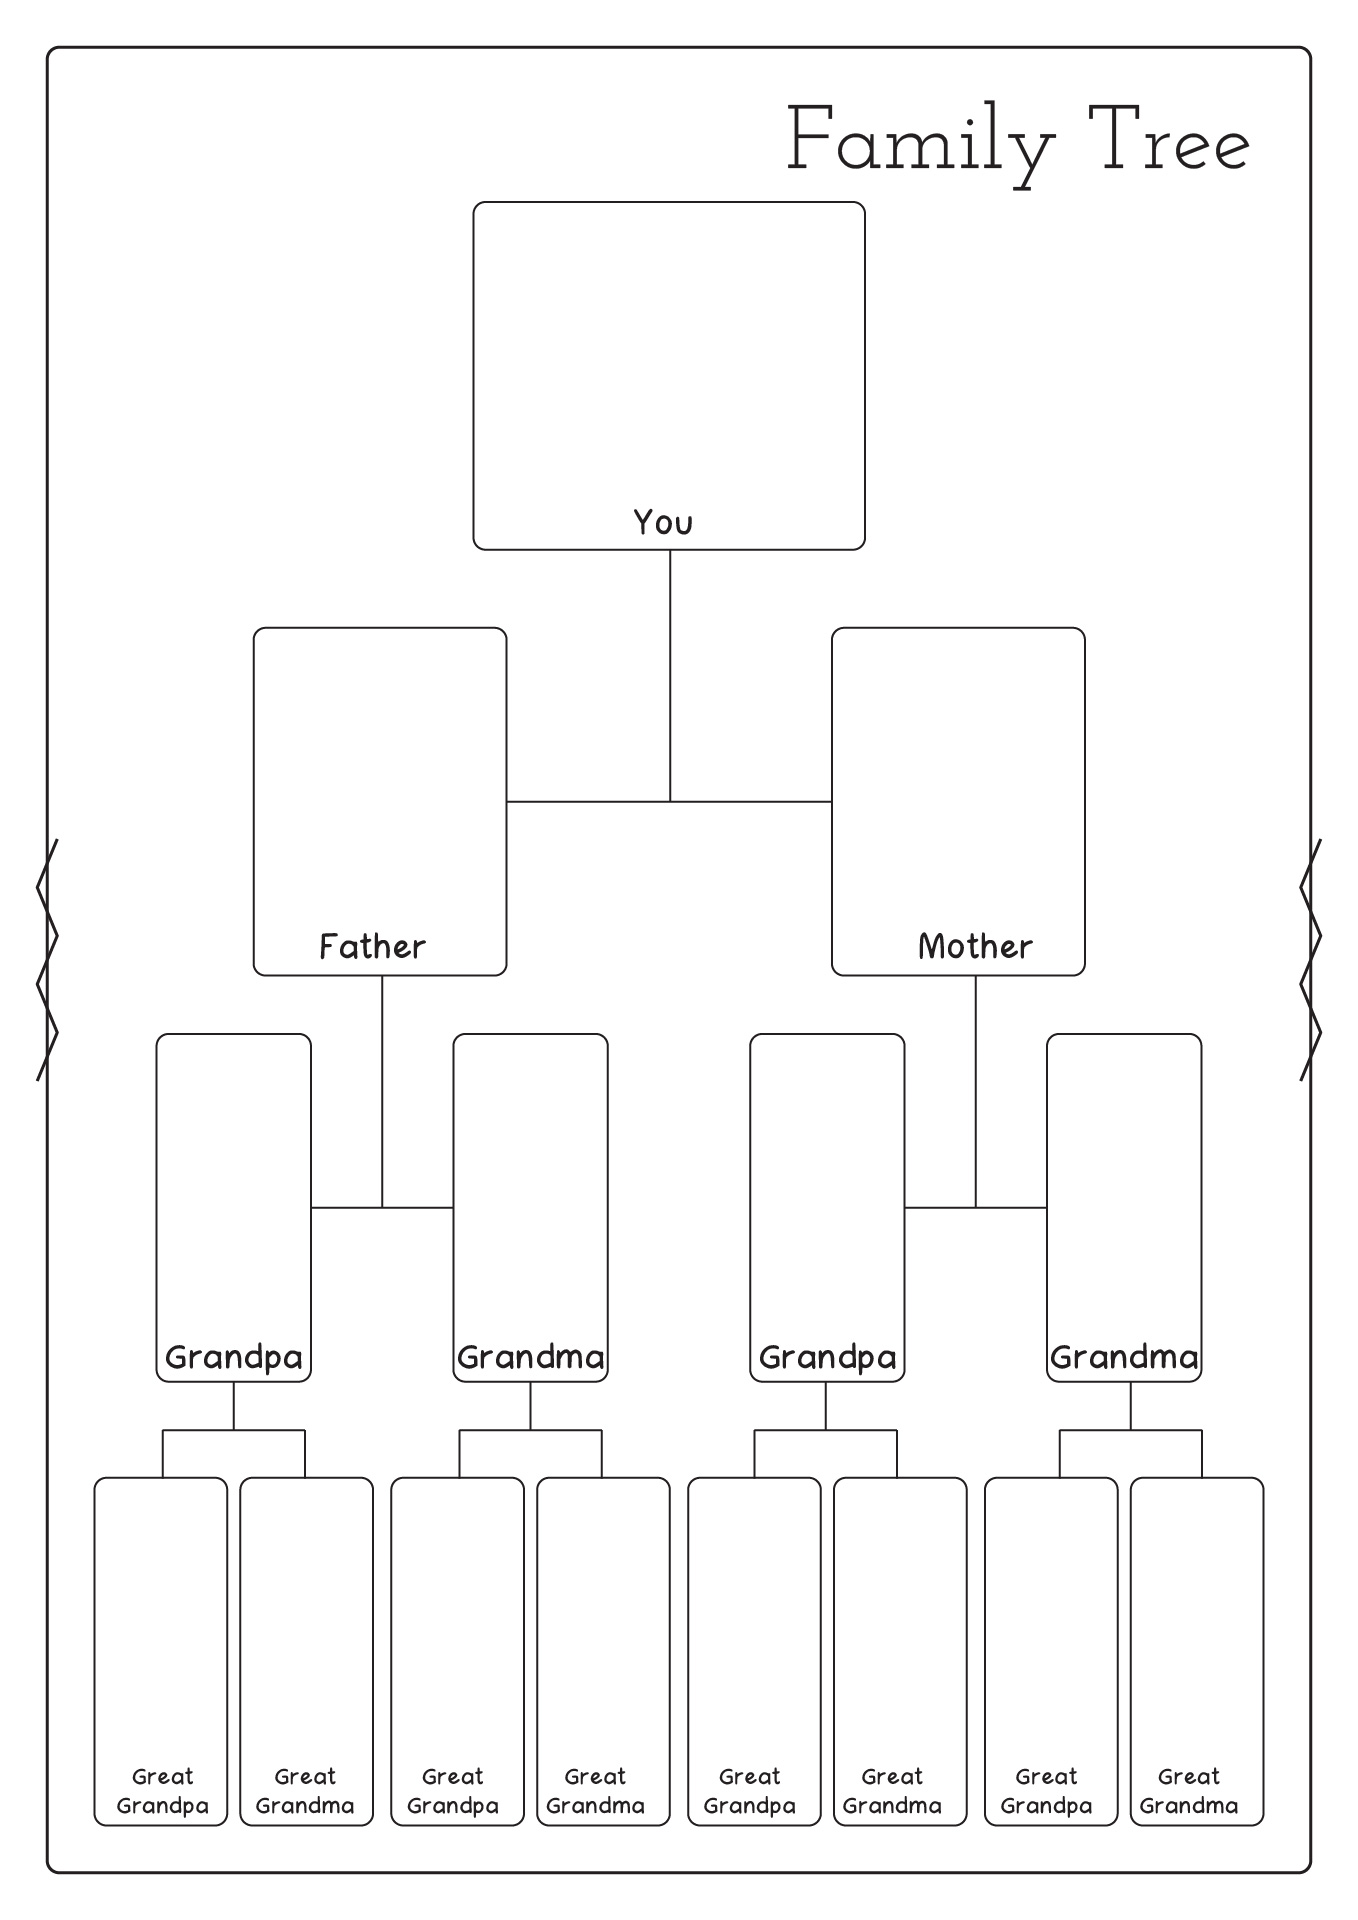 12-best-images-of-family-tree-pedigree-chart-worksheet-6-generation-pedigree-chart-printable